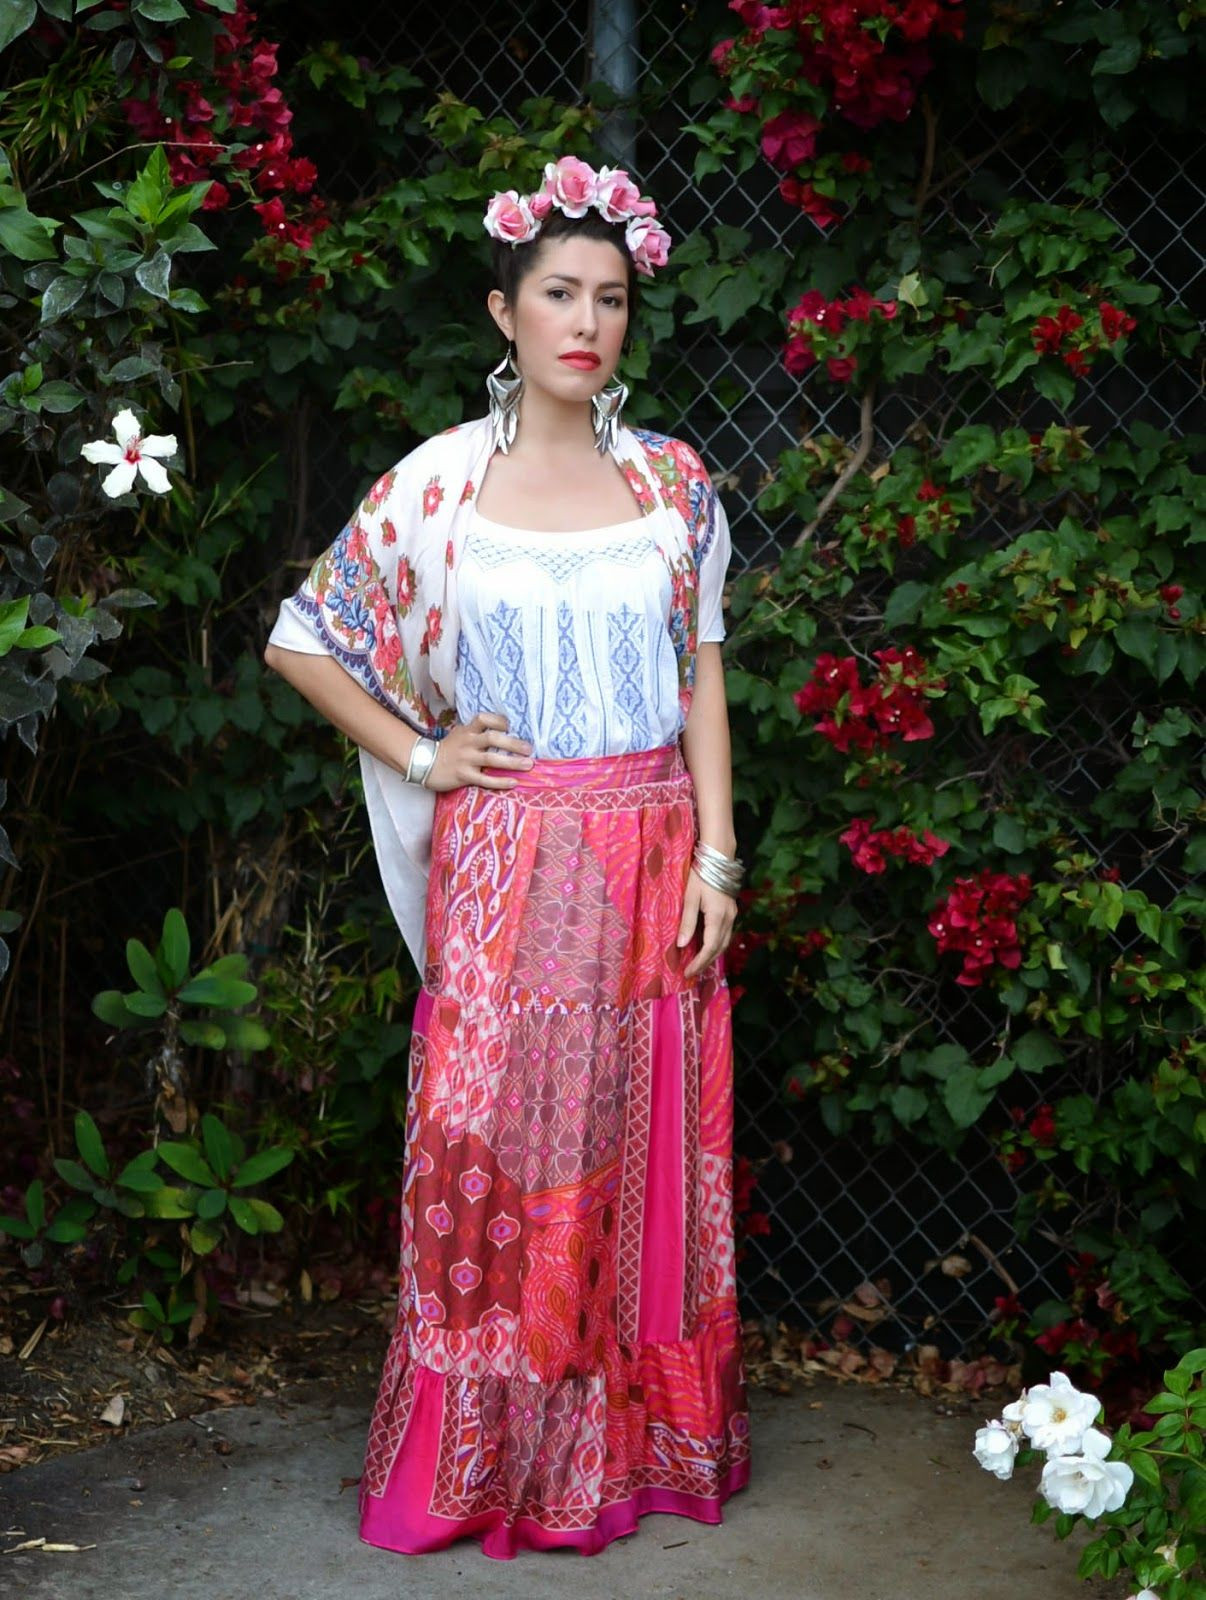 Best ideas about DIY Frida Kahlo Costume
. Save or Pin DIY Halloween Costume Frida Kahlo Spanish Muse diy Now.